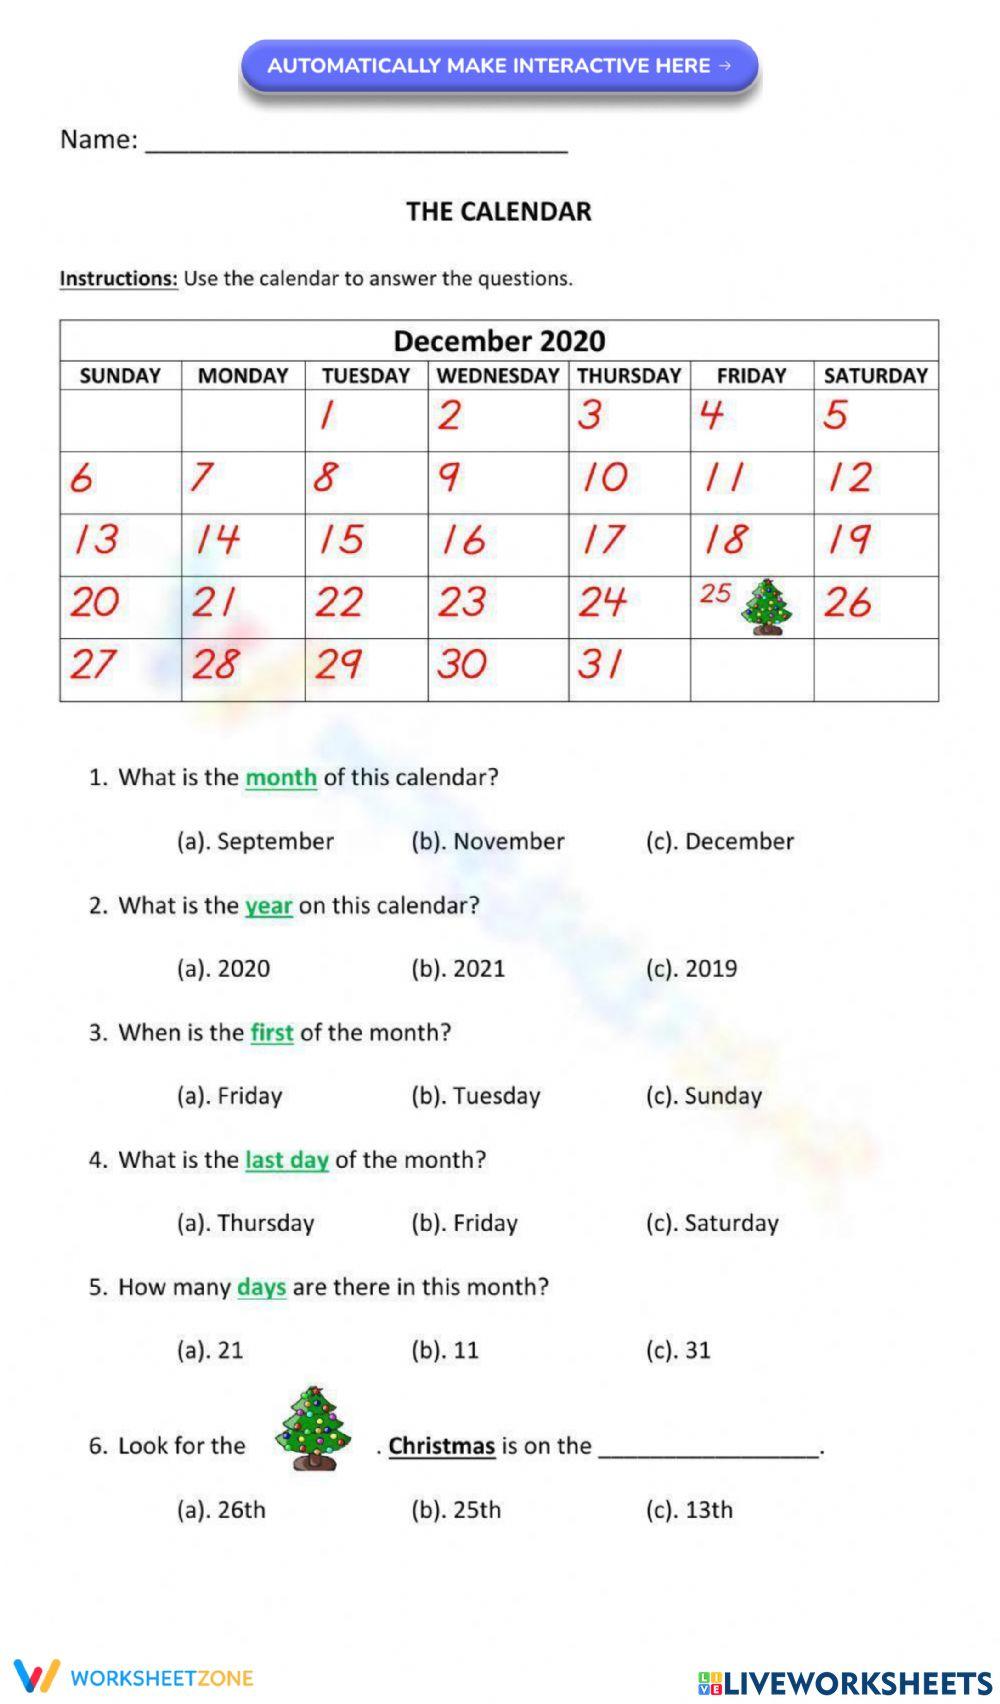 The Calendar 2